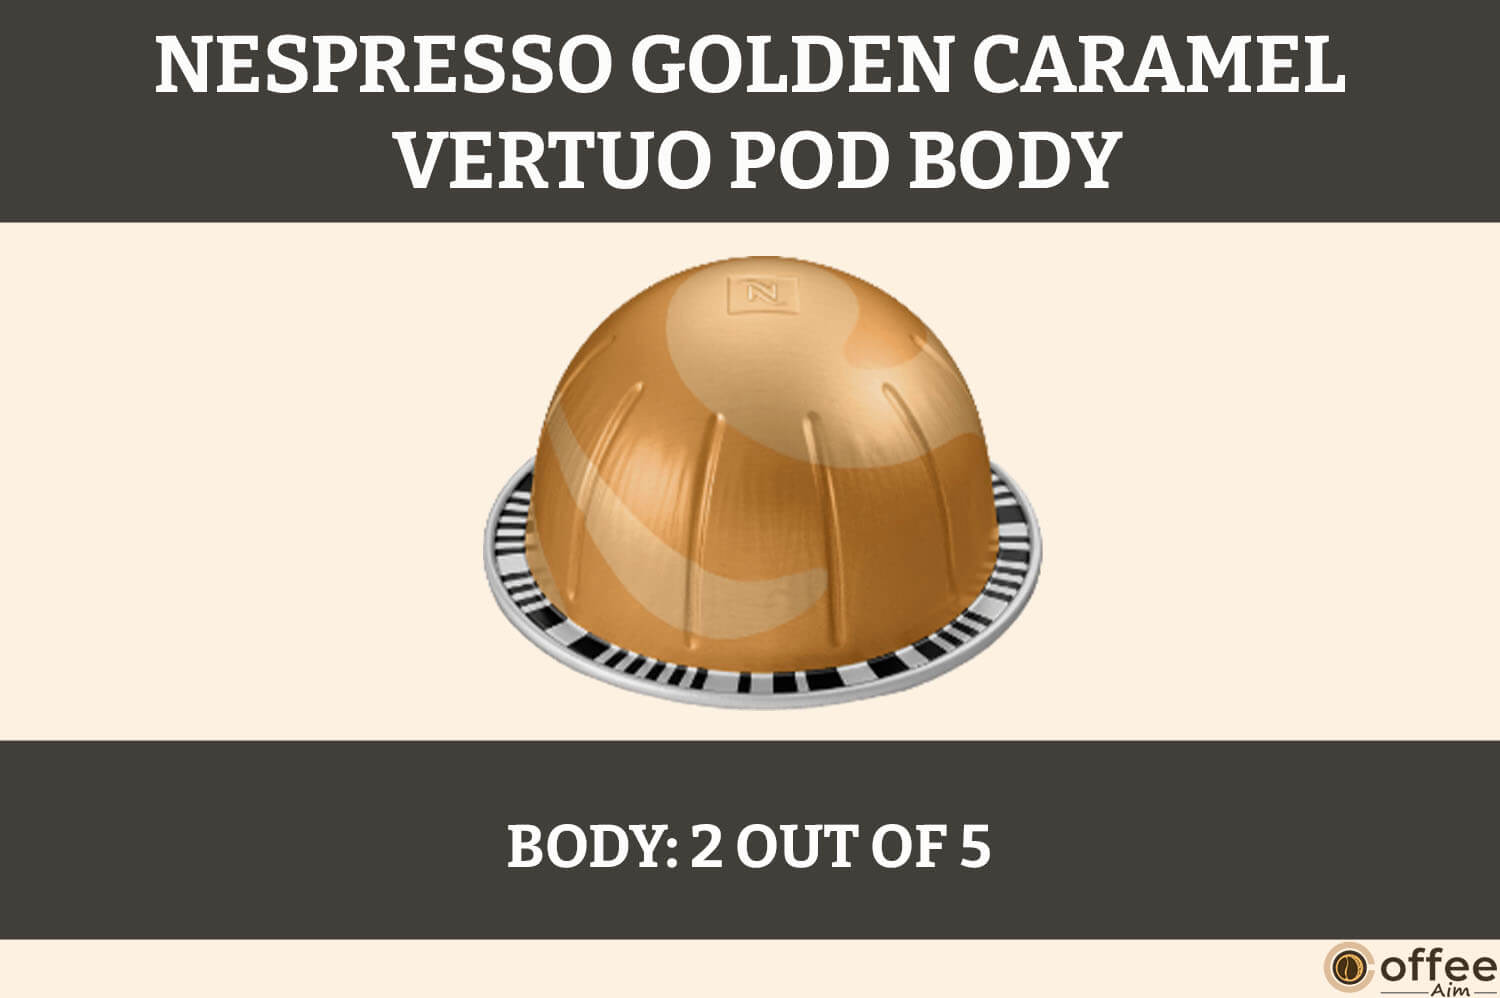 Body of Nespresso Golden Caramel Vertuo Pod showcased for the article 'Nespresso Golden Caramel Vertuo Pod Review'